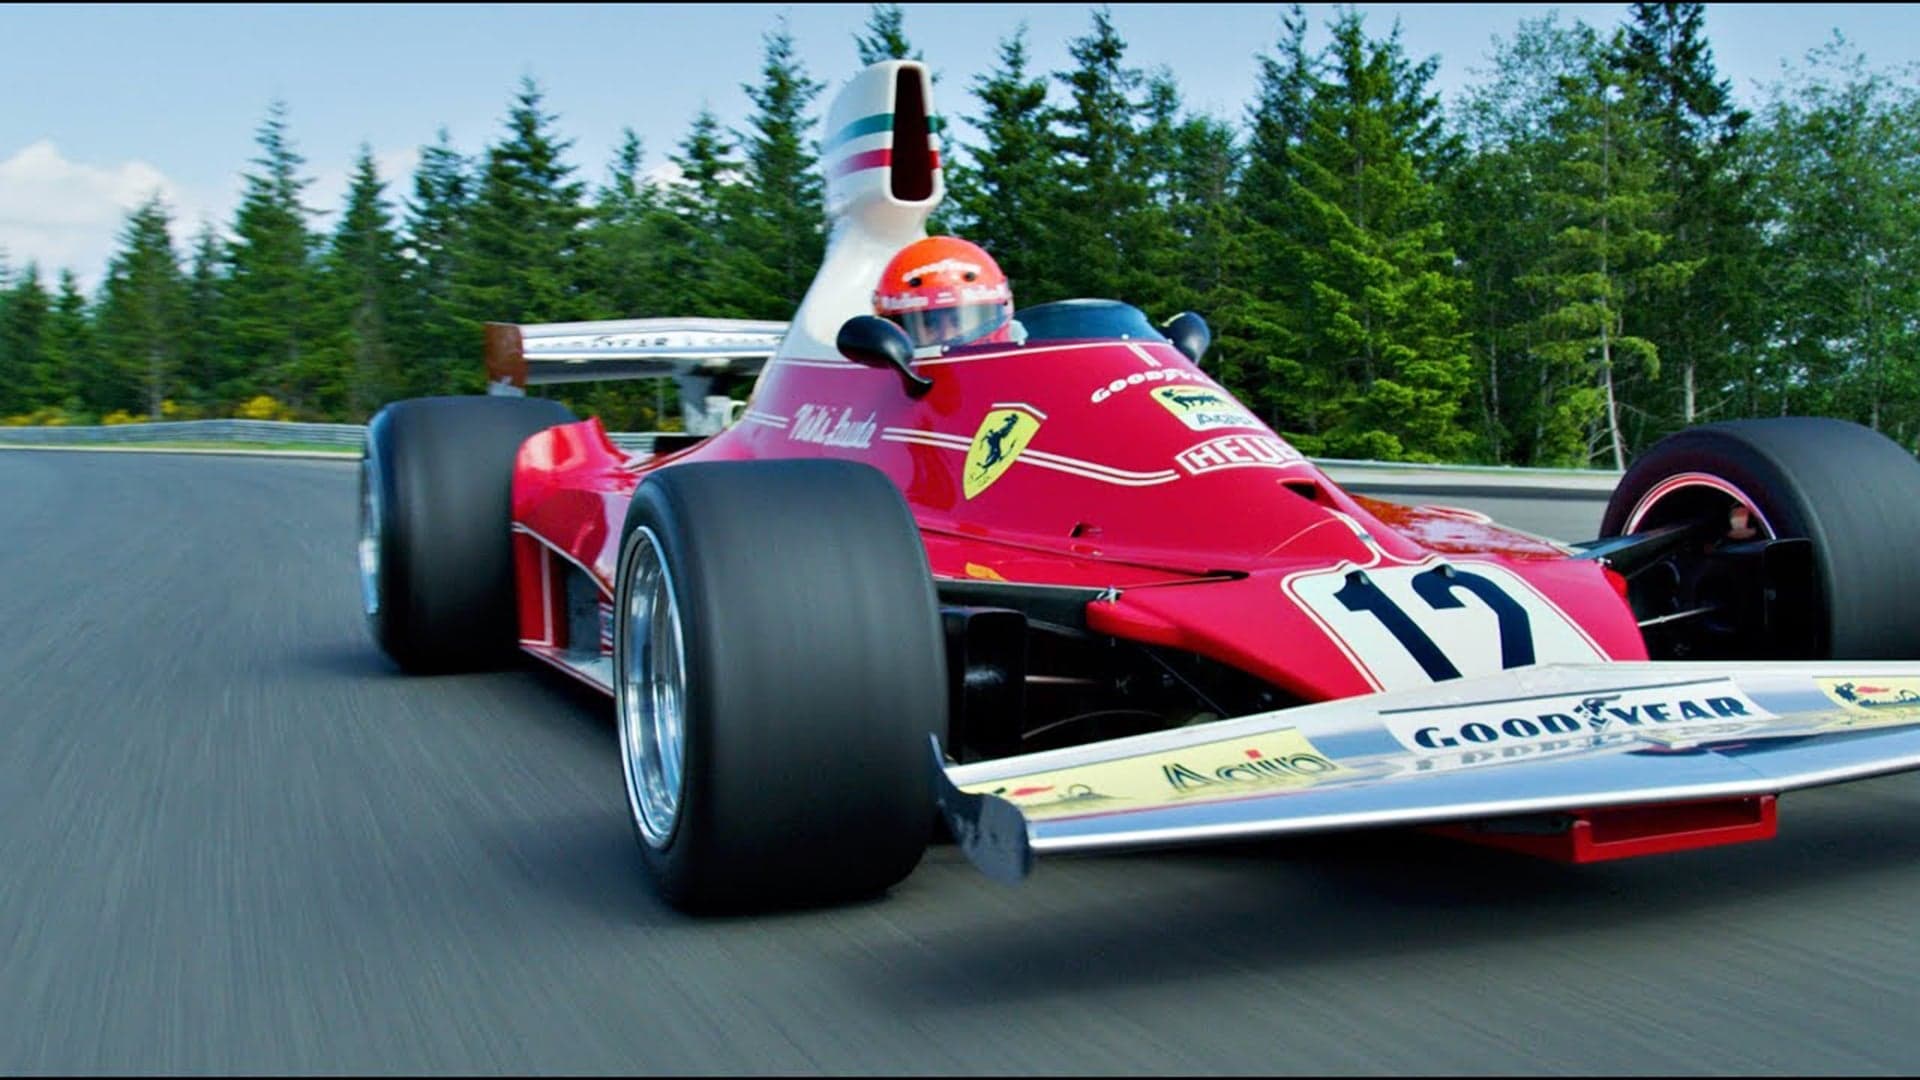 Watch Niki Lauda’s Race-Ready, 500+ HP 1975 Ferrari 312T Formula 1 Car Tear Up the Track